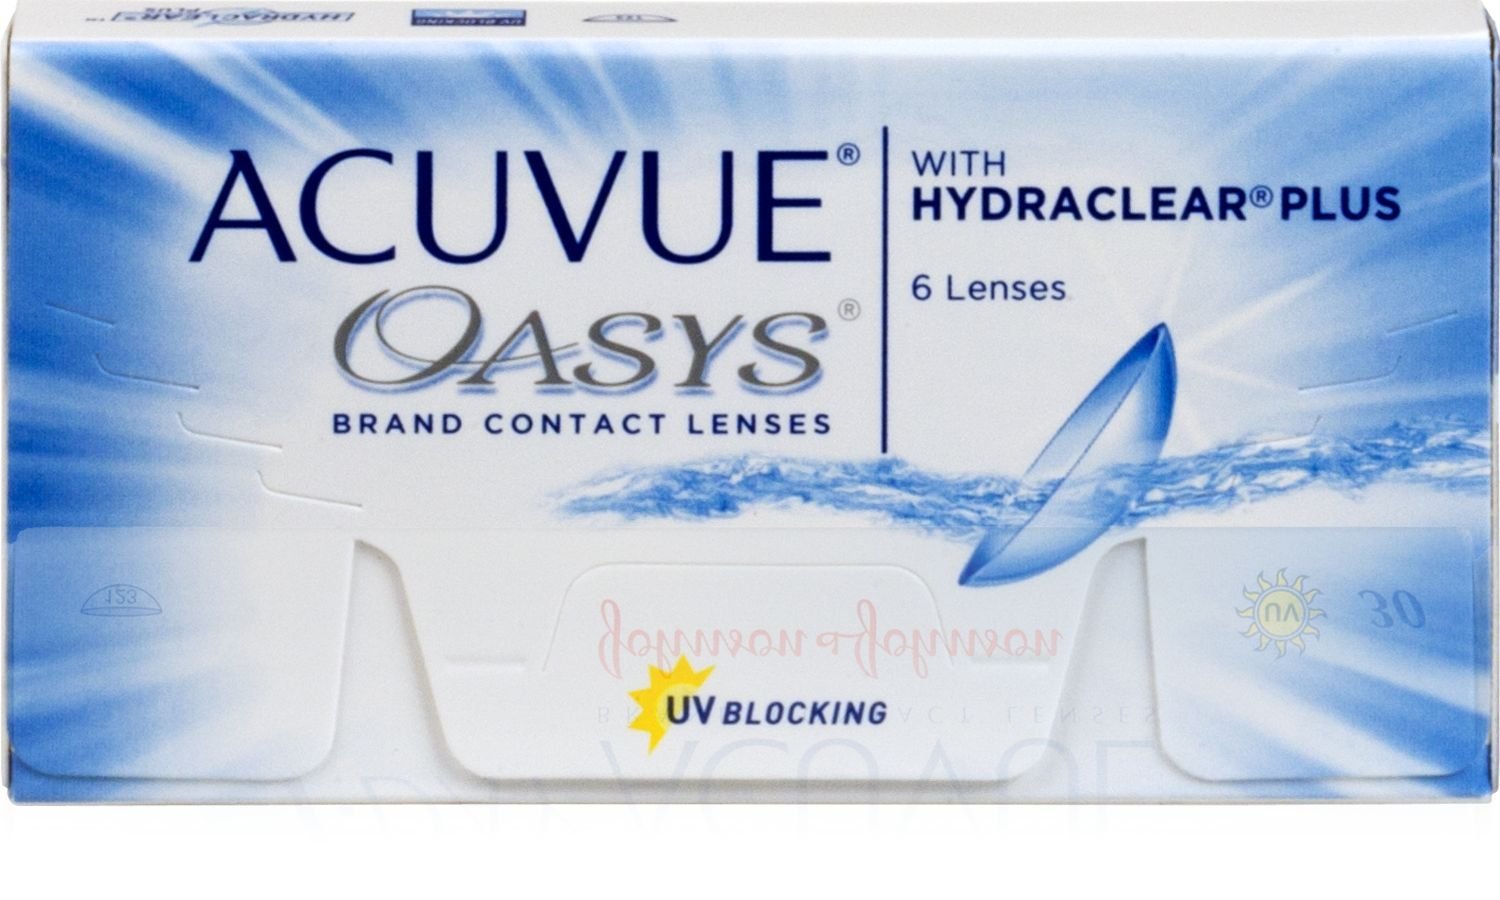 Acuvue Oasys Contact Lenses 6 lenses per box